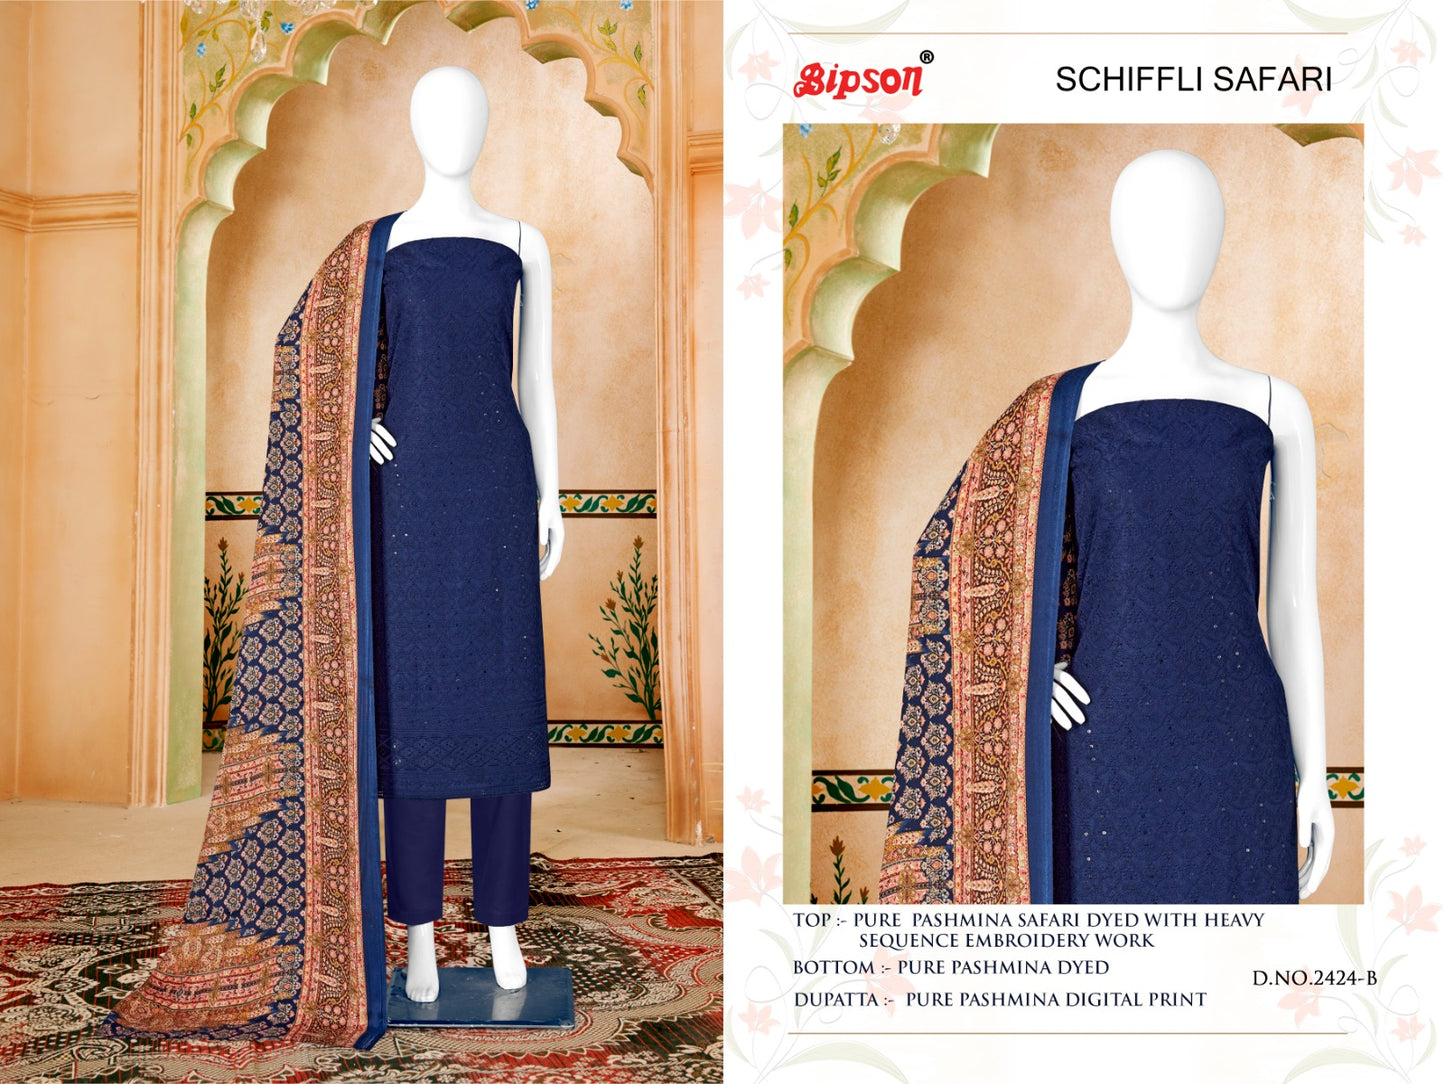 Schiffli Safari-2424 Bipson Prints Pashmina Suits